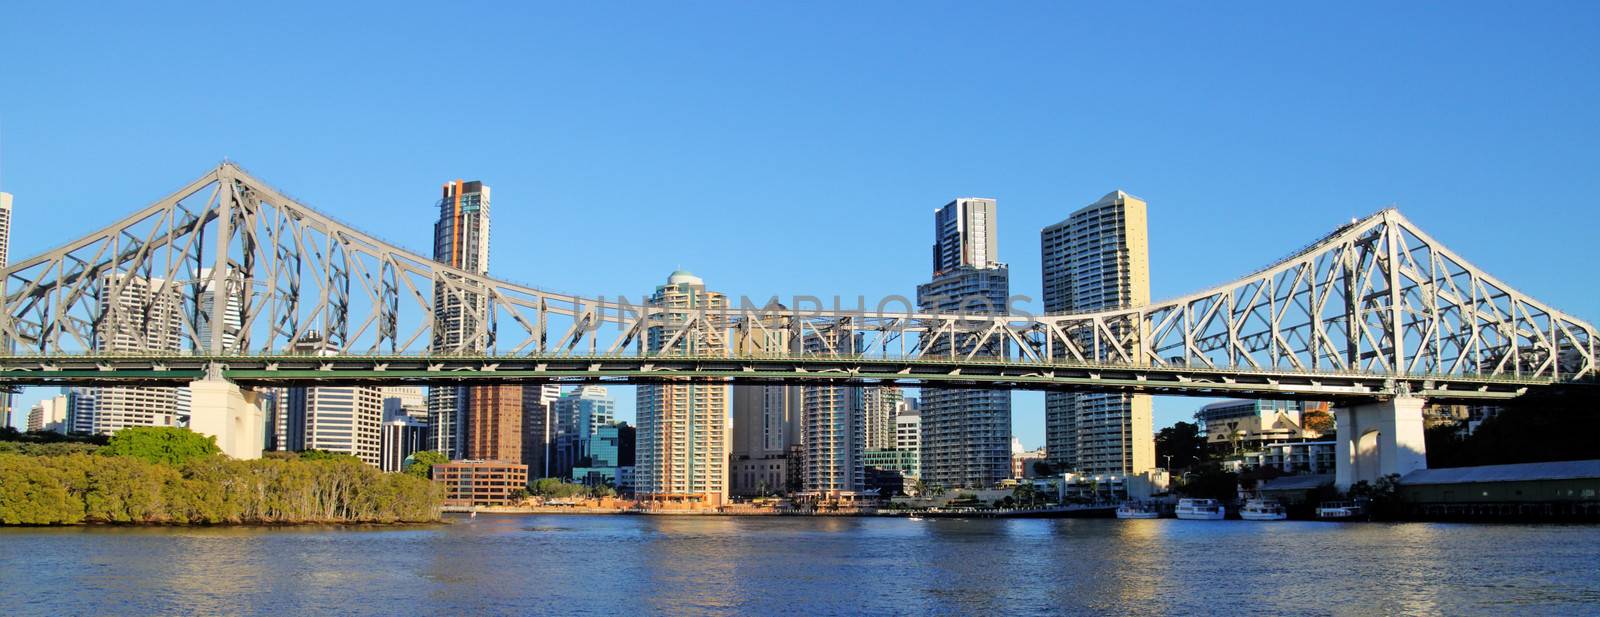 Story Bridge Brisbane Australia by jabiru